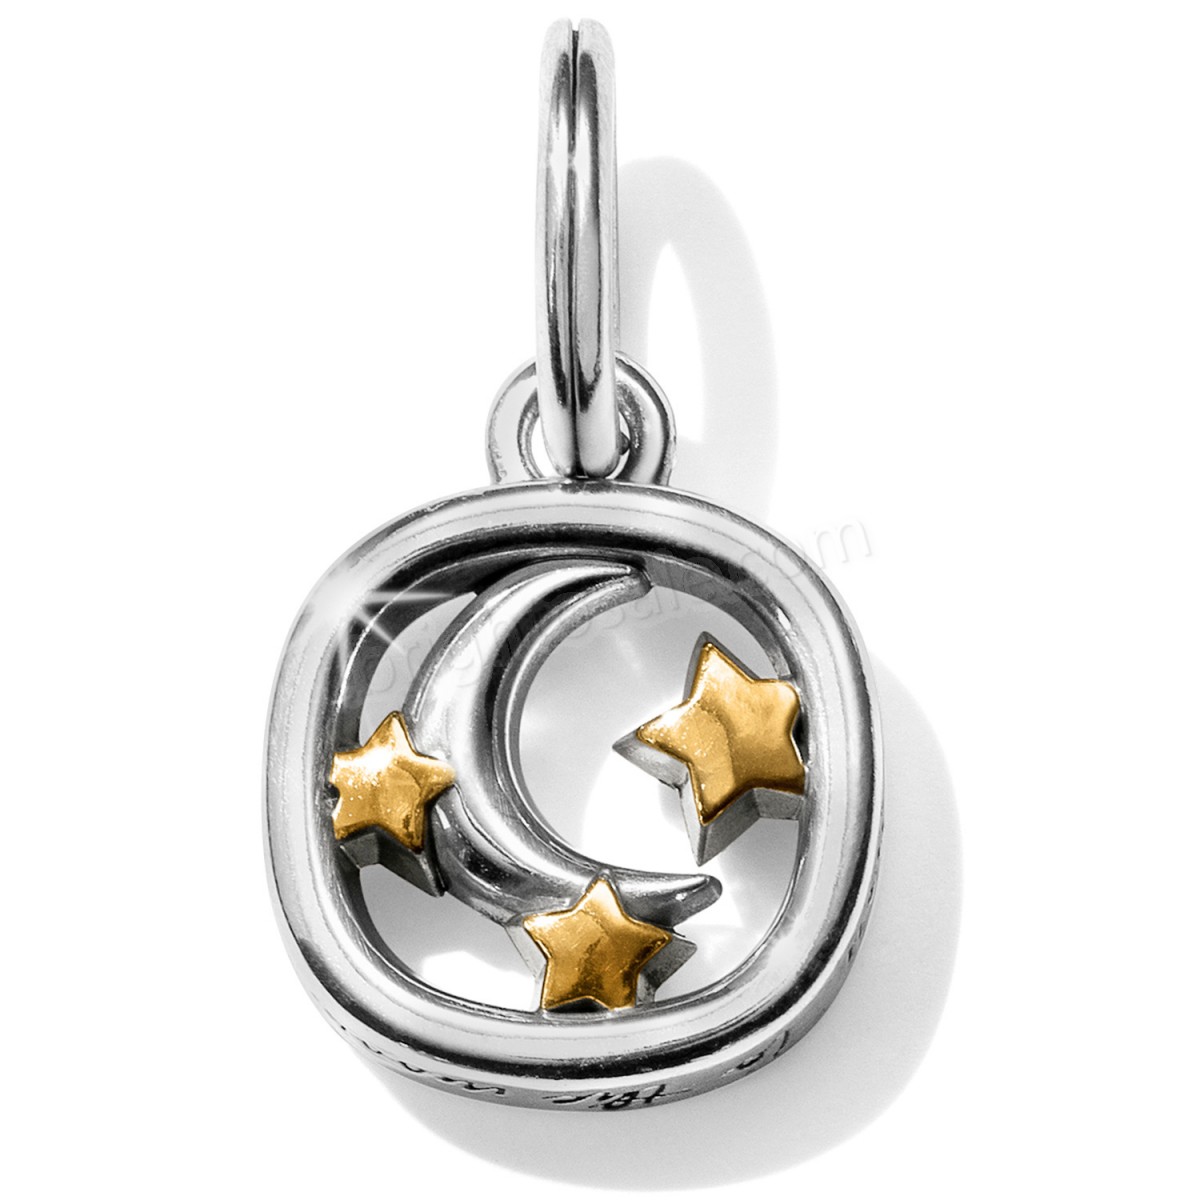 Brighton Collectibles & Online Discount Amorette Key Amulet Necklace Gift Set - -0